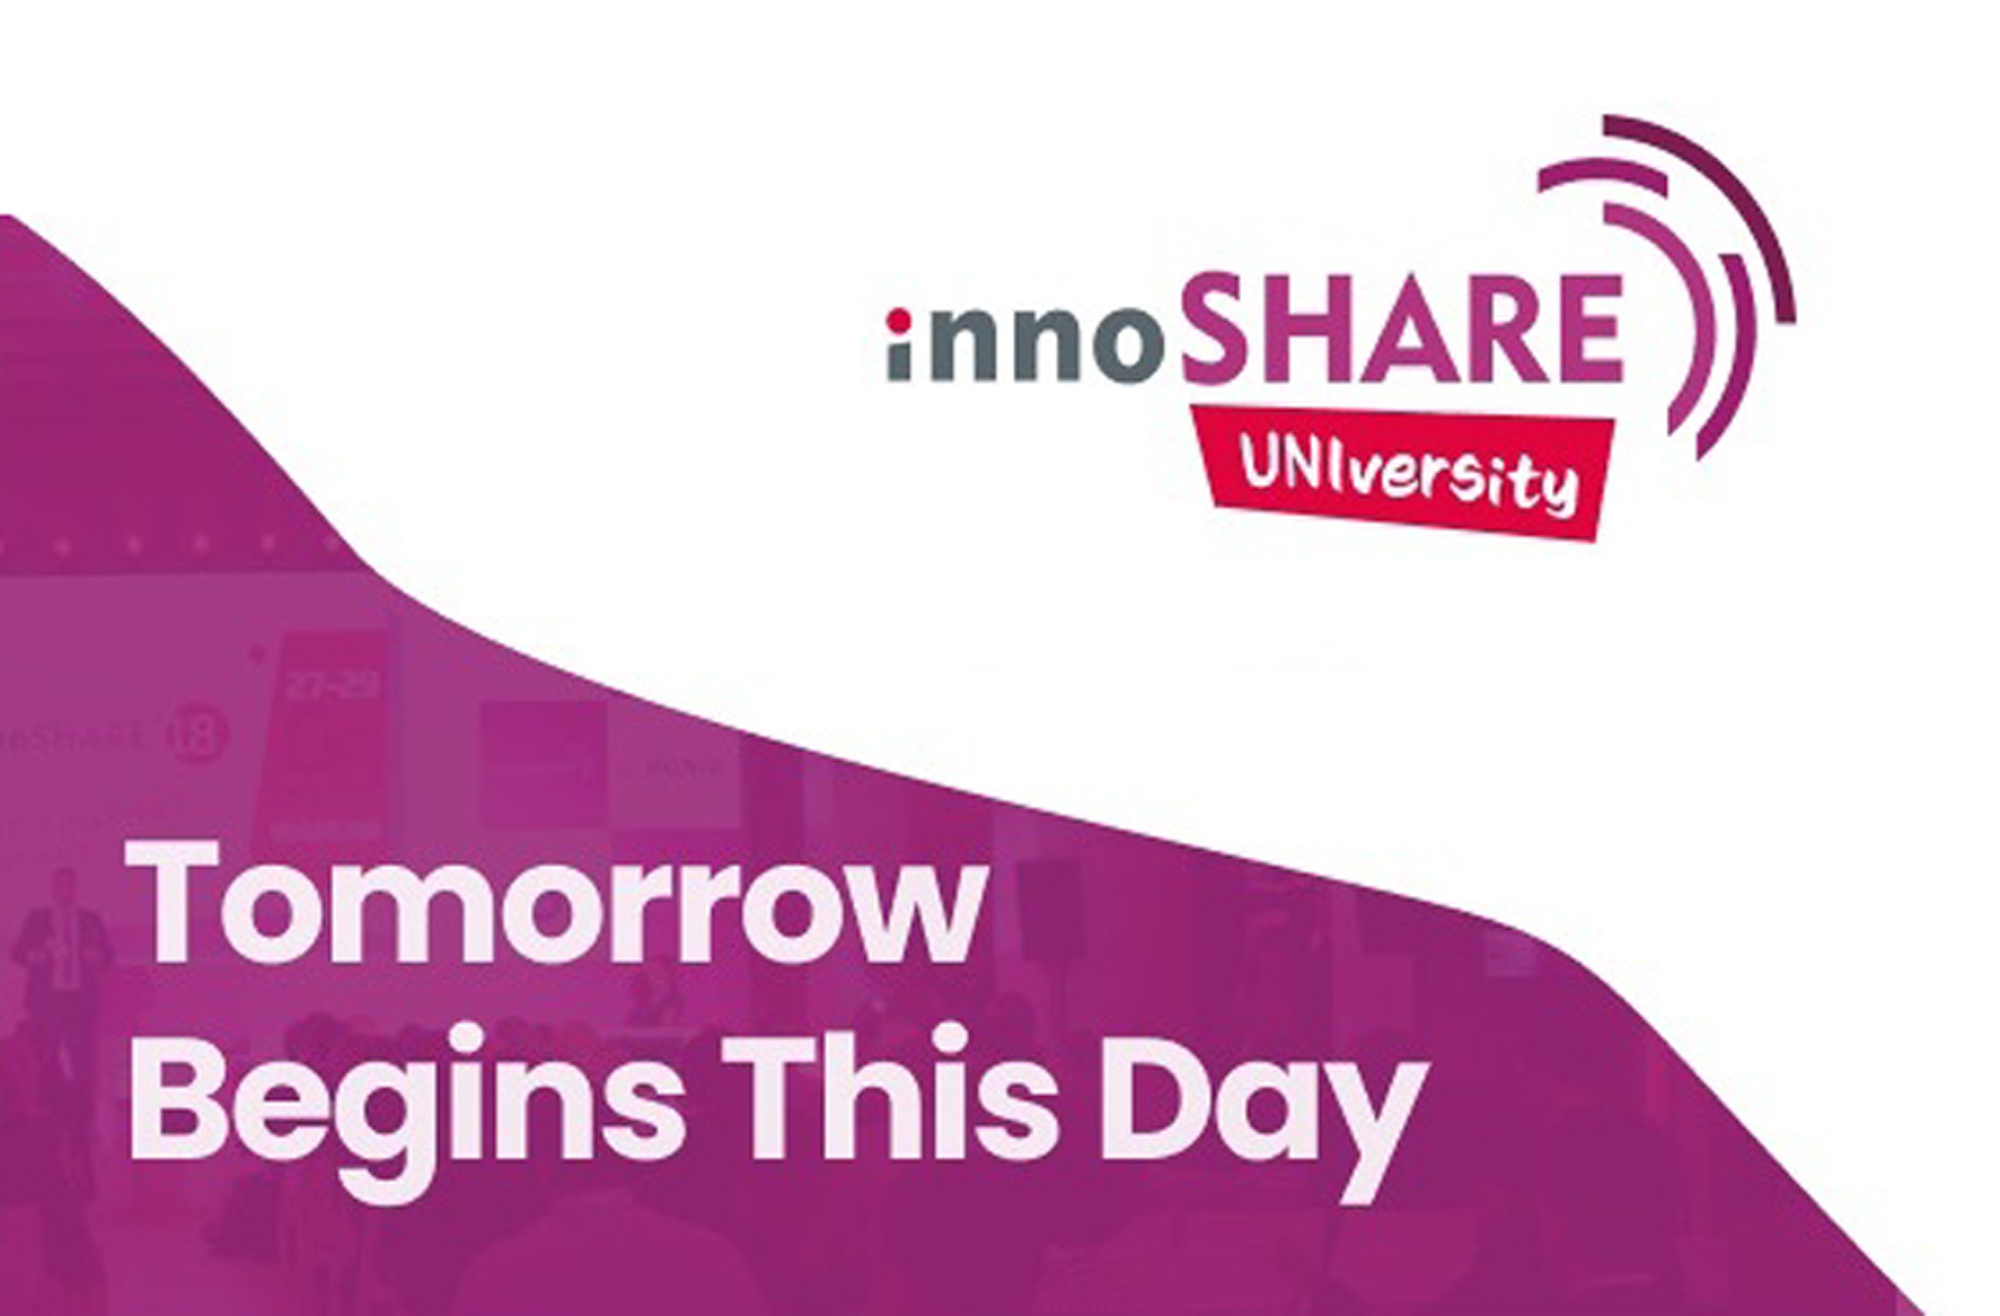 SWPS University Partners with Innoshare UNIversity 2020